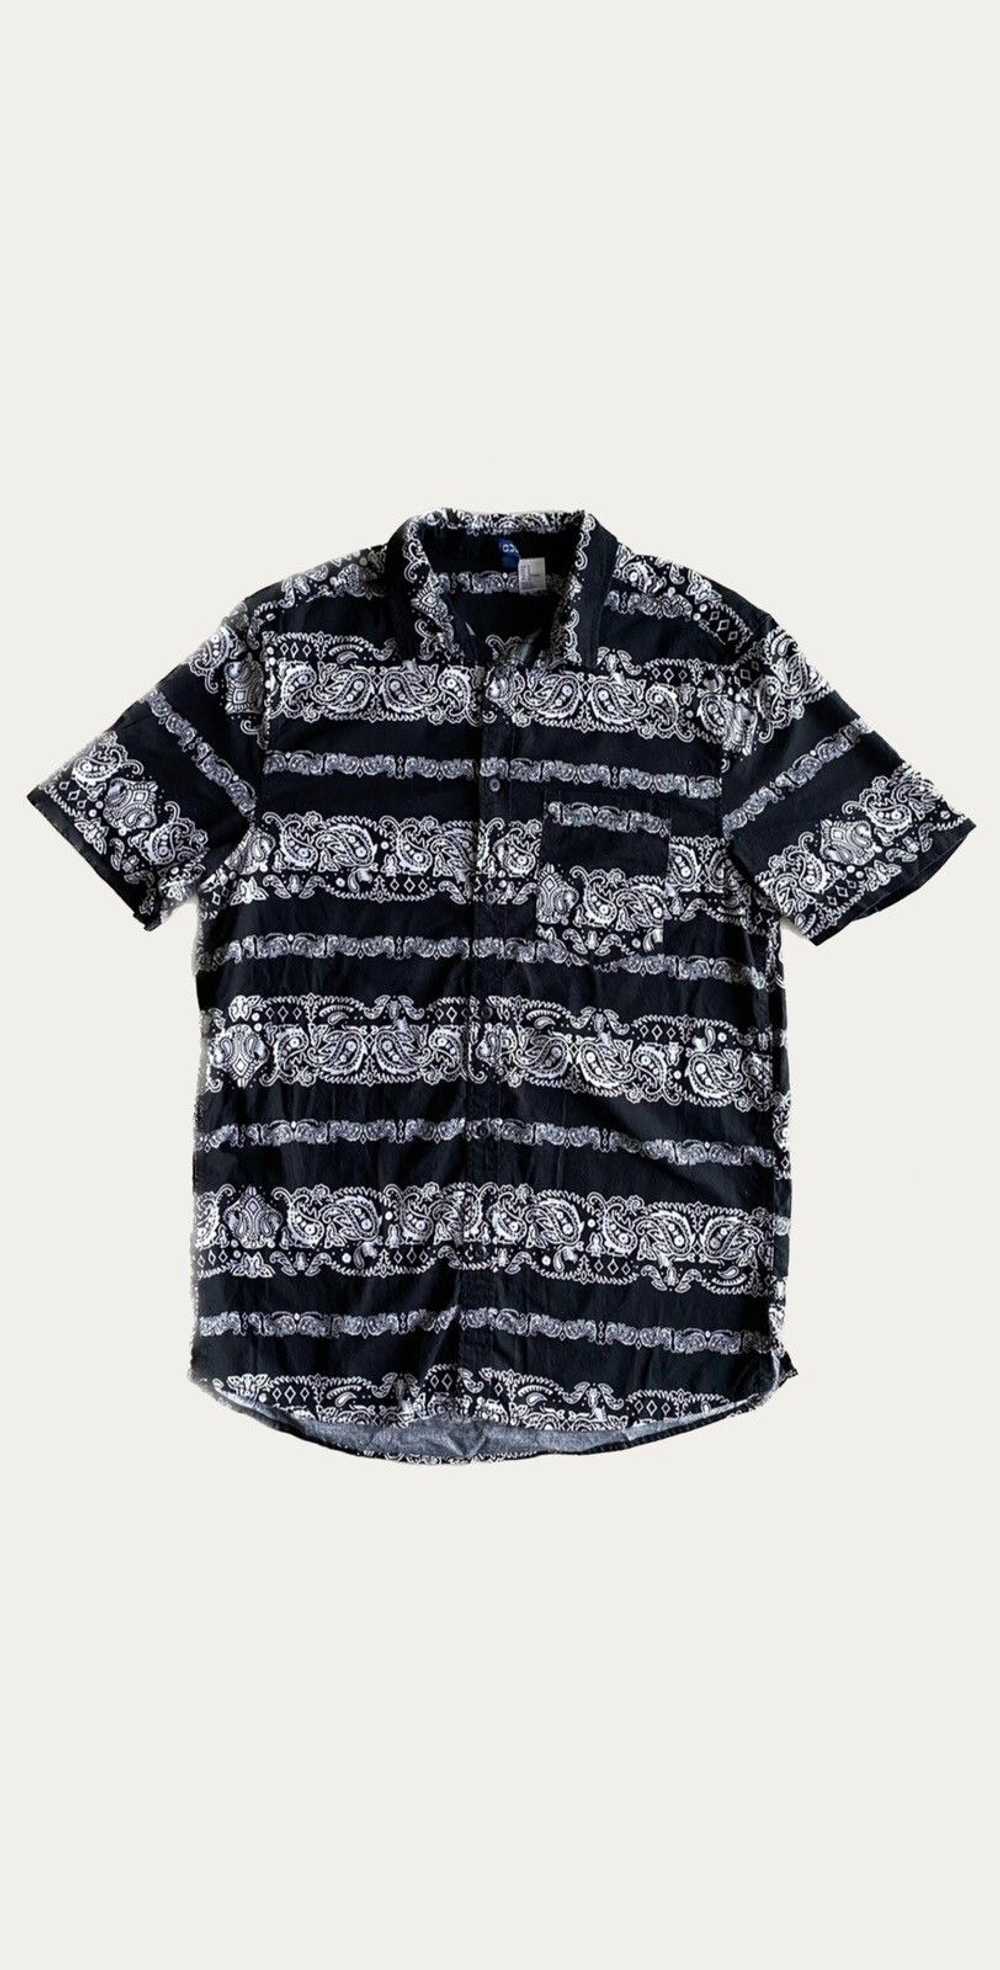 Japanese Brand Black Paisley Shirt - image 1